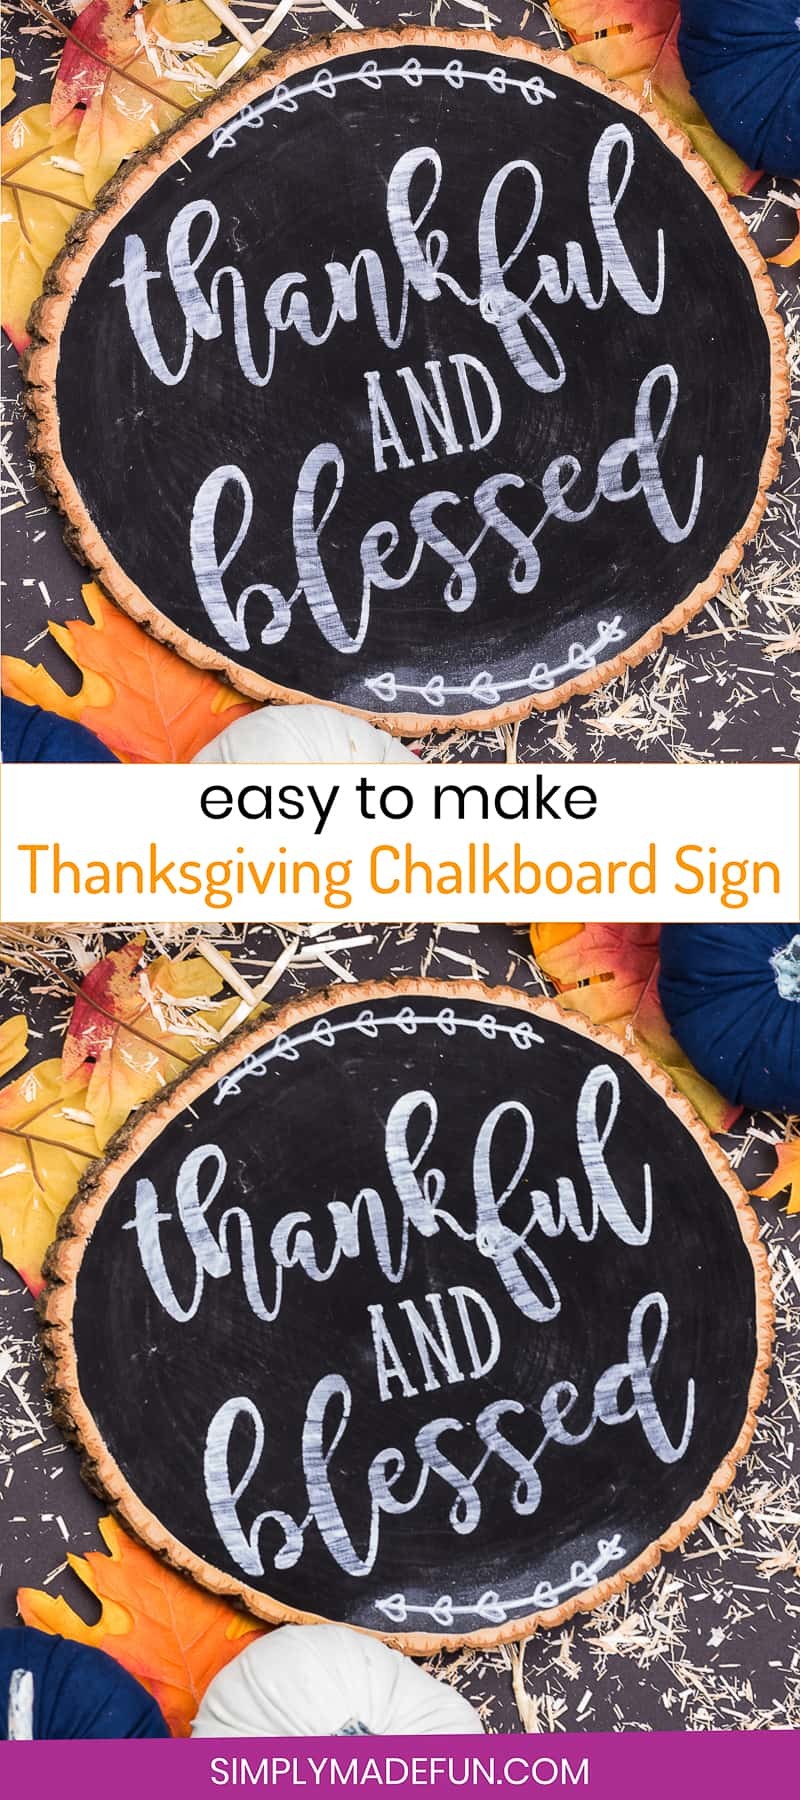 Thanksgiving Chalkboard Wooden Sign